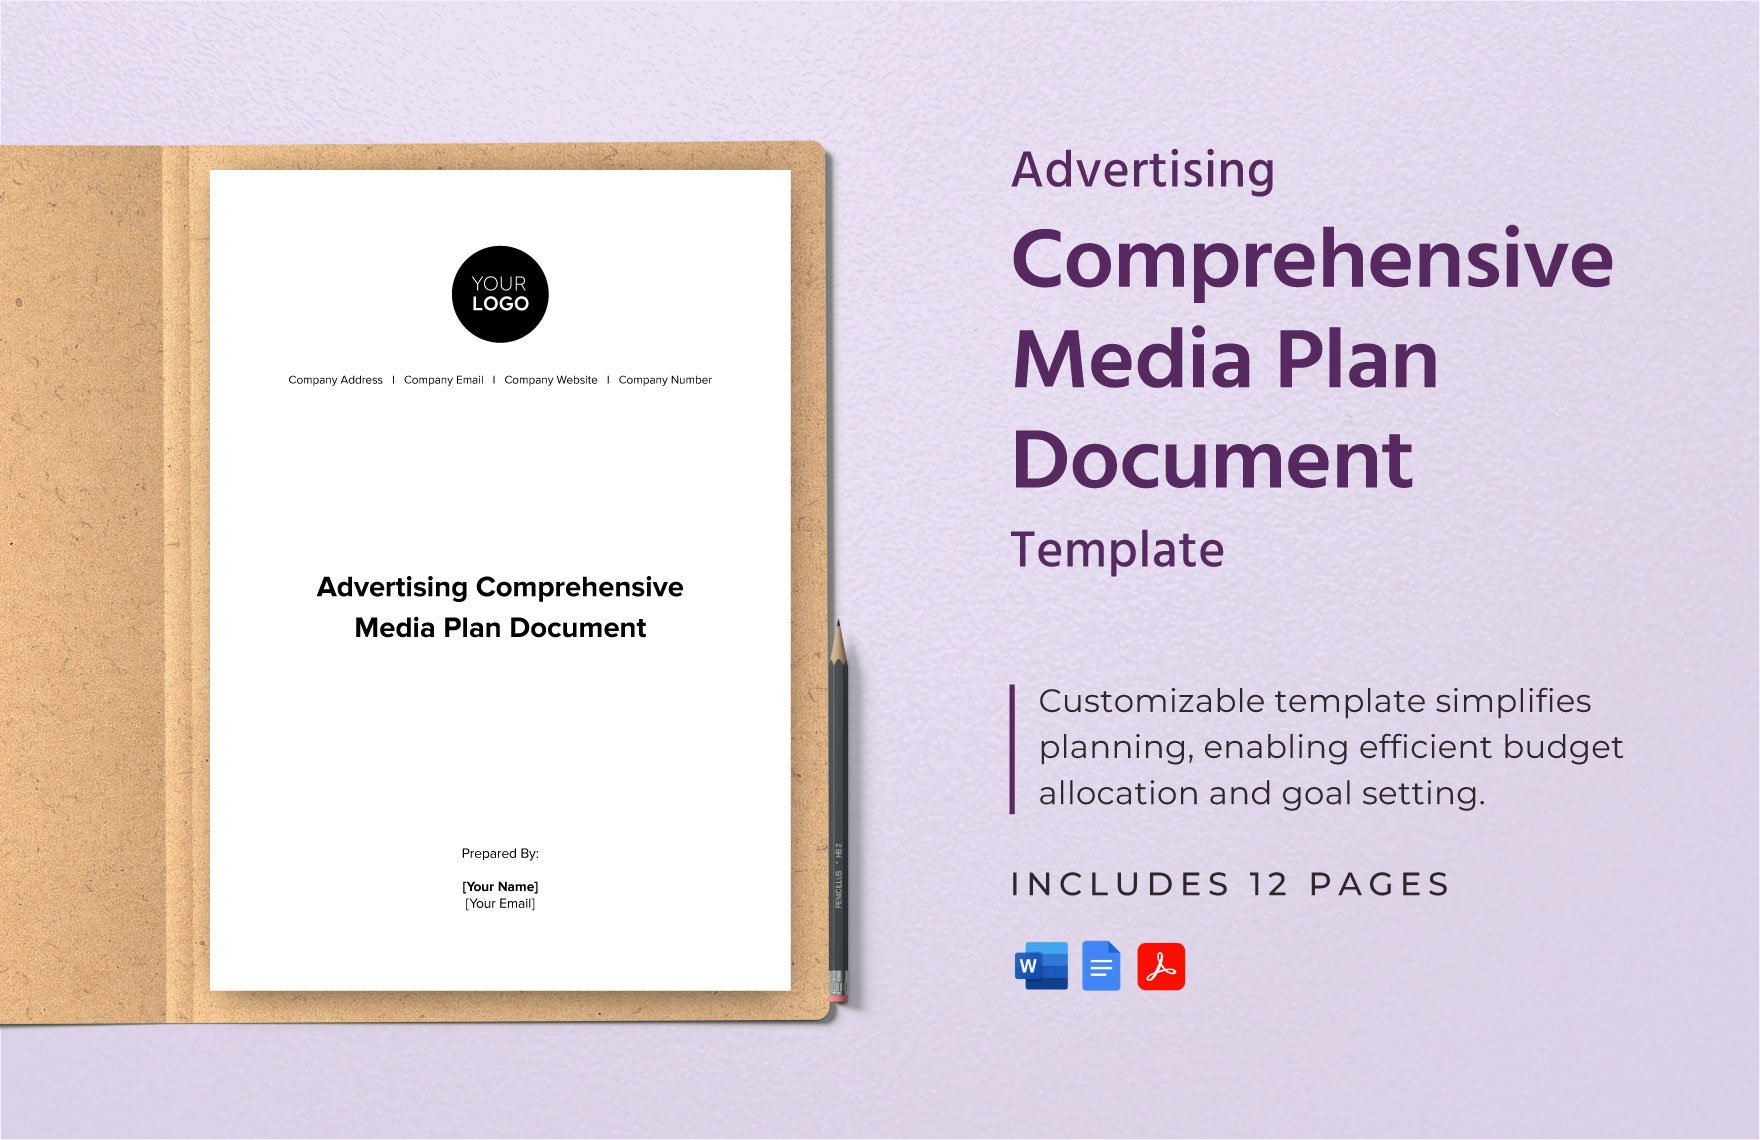 Advertising Comprehensive Media Plan Document Template in Word, Google Docs, PDF